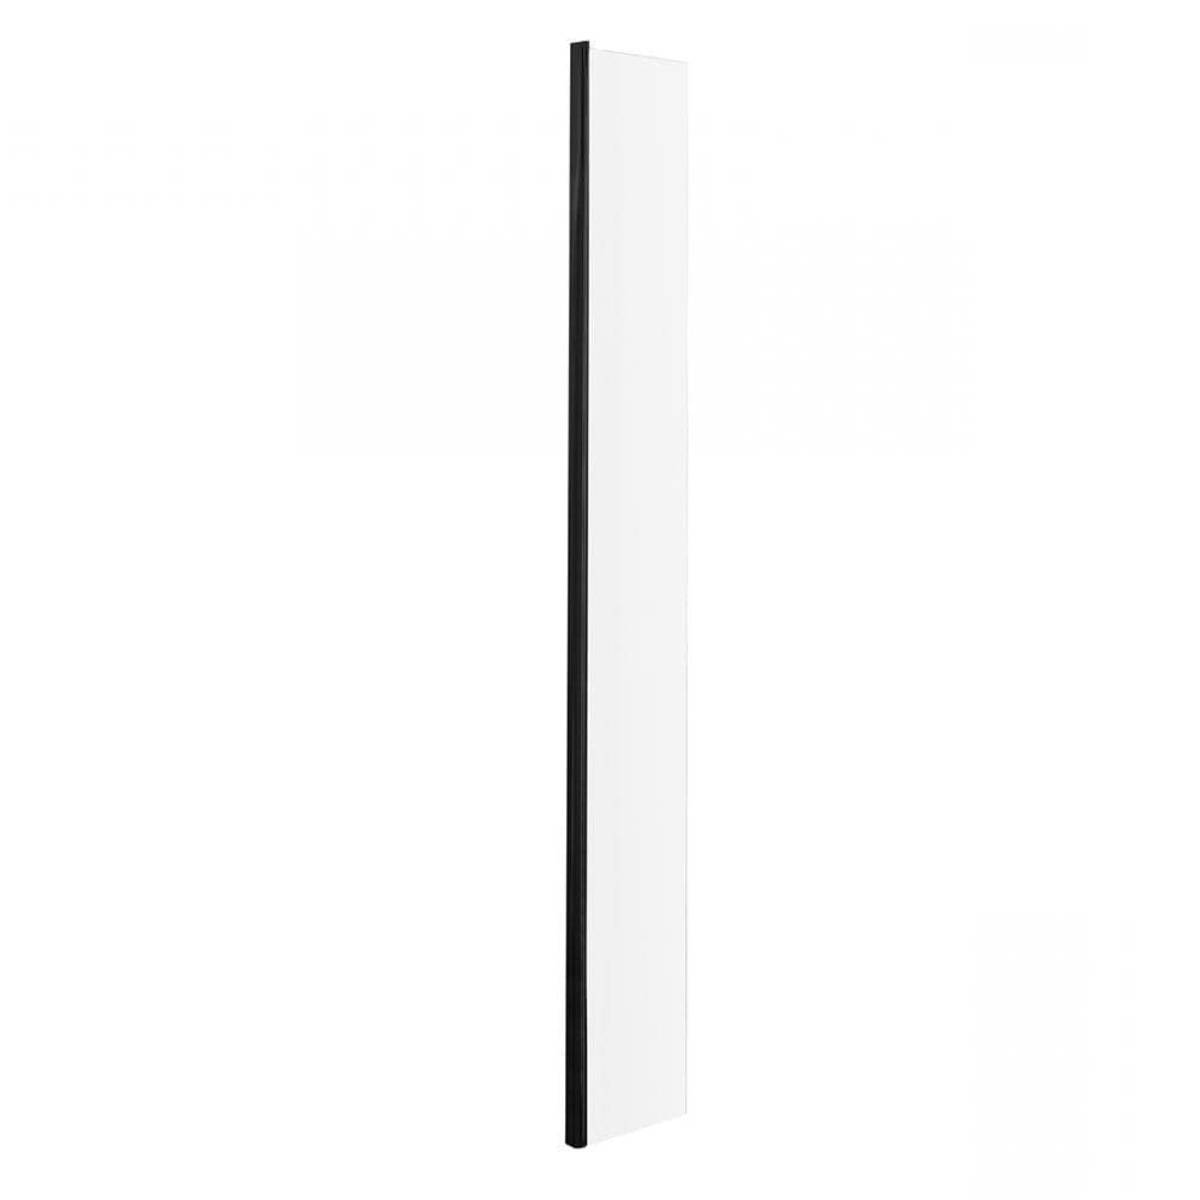 Aquadart 10mm Wetroom Profile Pack - Black (10404)